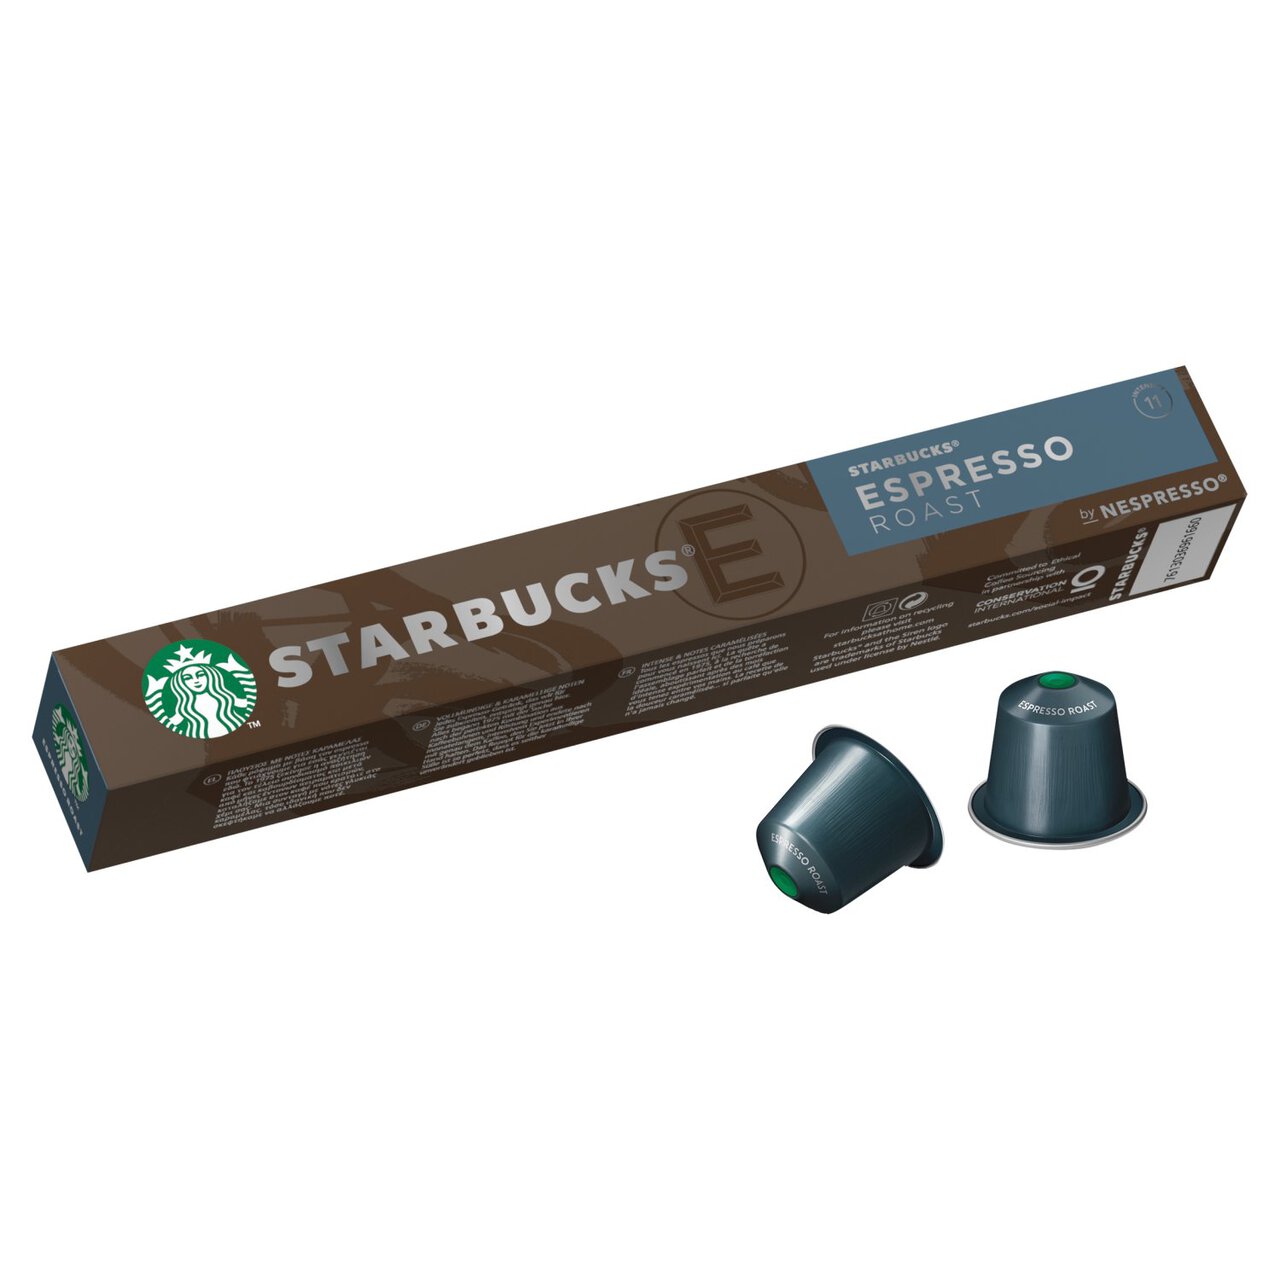 STARBUCKS by NESPRESSO Espresso Roast Coffee Pods 10 per pack